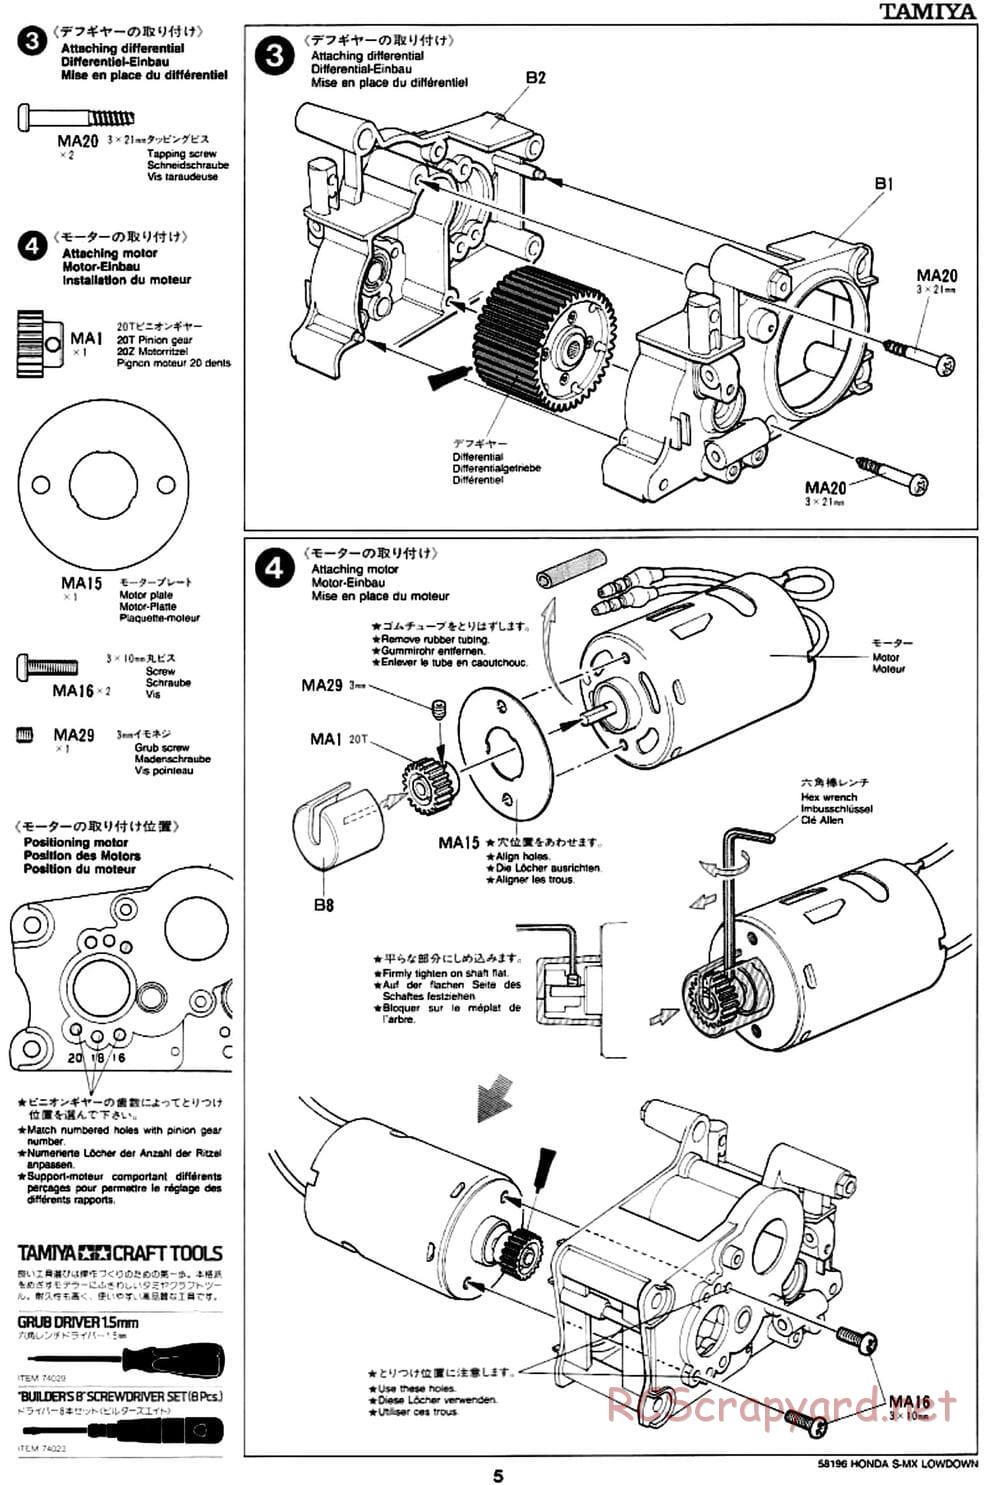 Tamiya - Honda S-MX Lowdown - M01 Chassis - Manual - Page 5